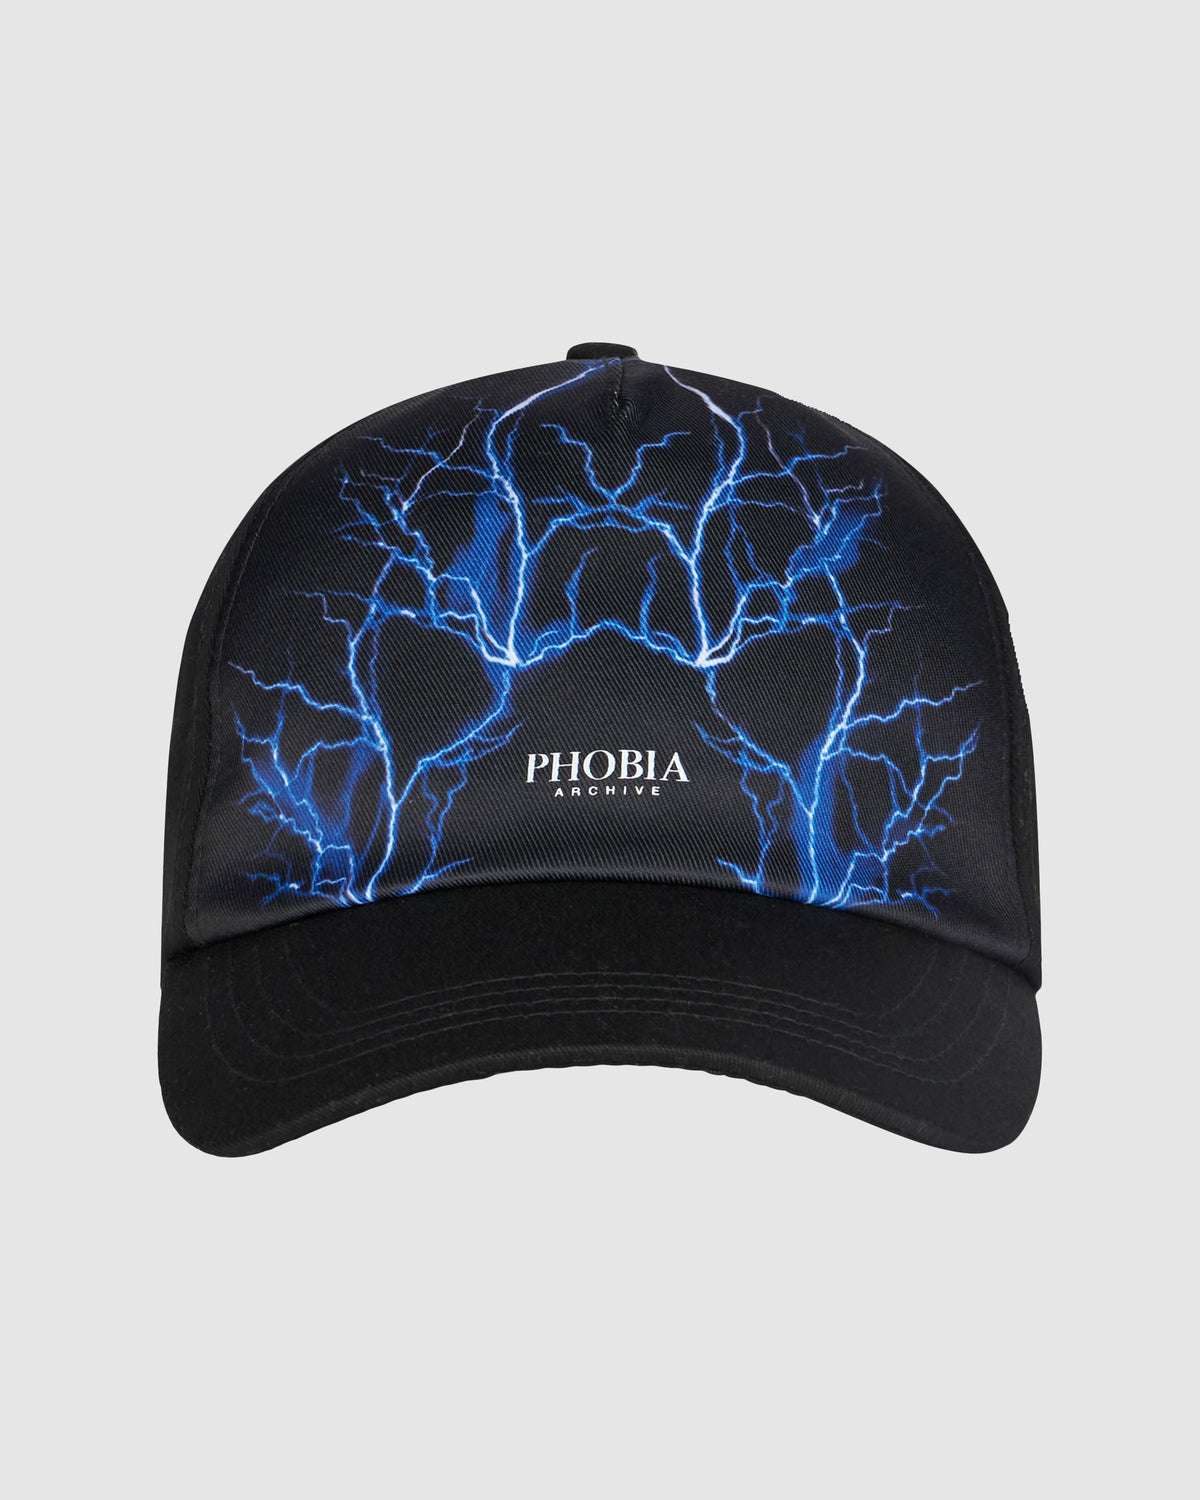 PHOBIA BLACK HAT WITH BLUE LIGHTNING